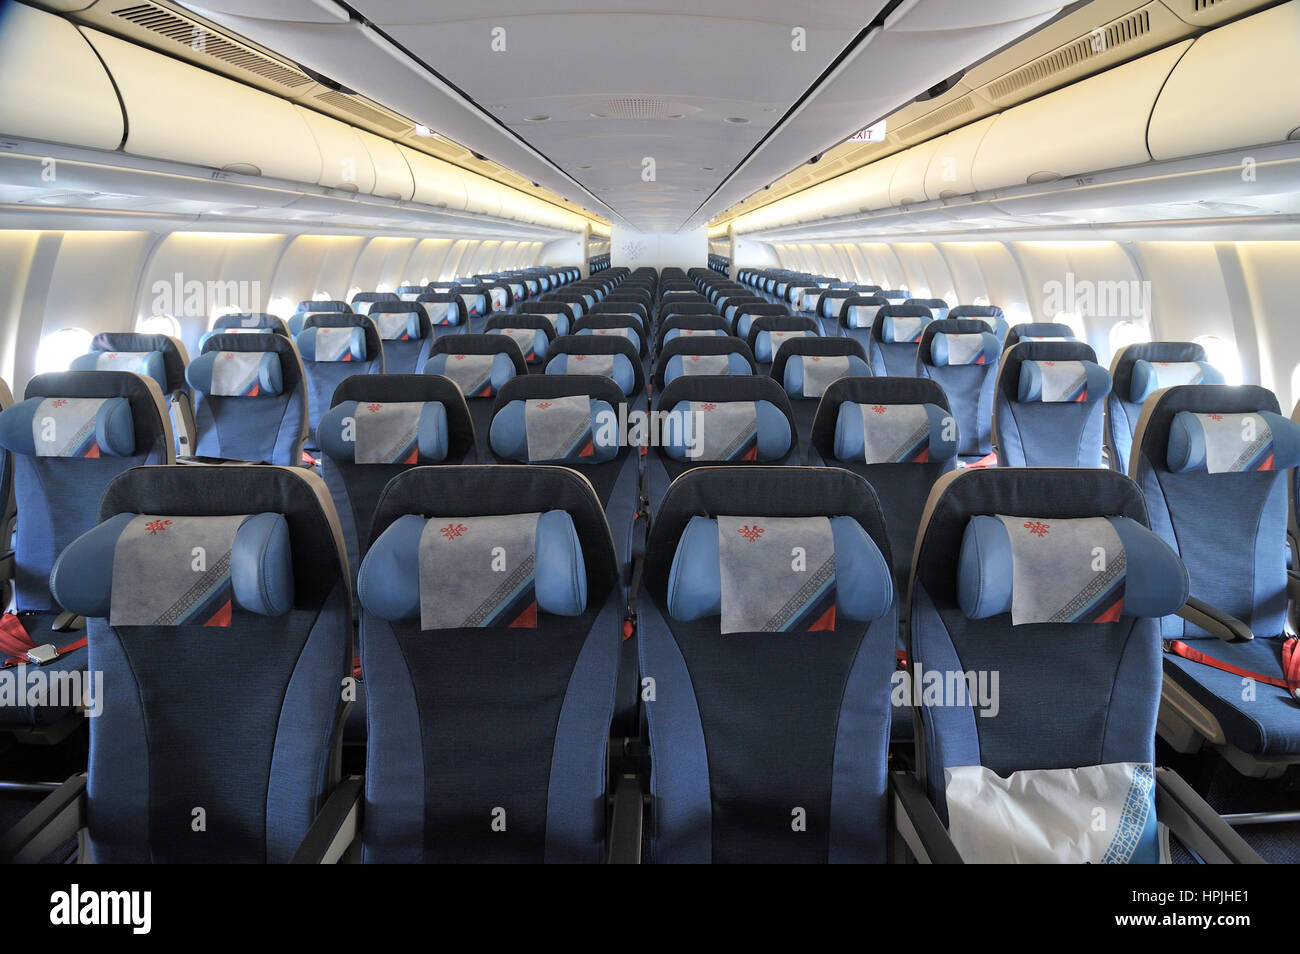 Air Serbia Airbus A330 Wide Body Airplane Passenger Cabin